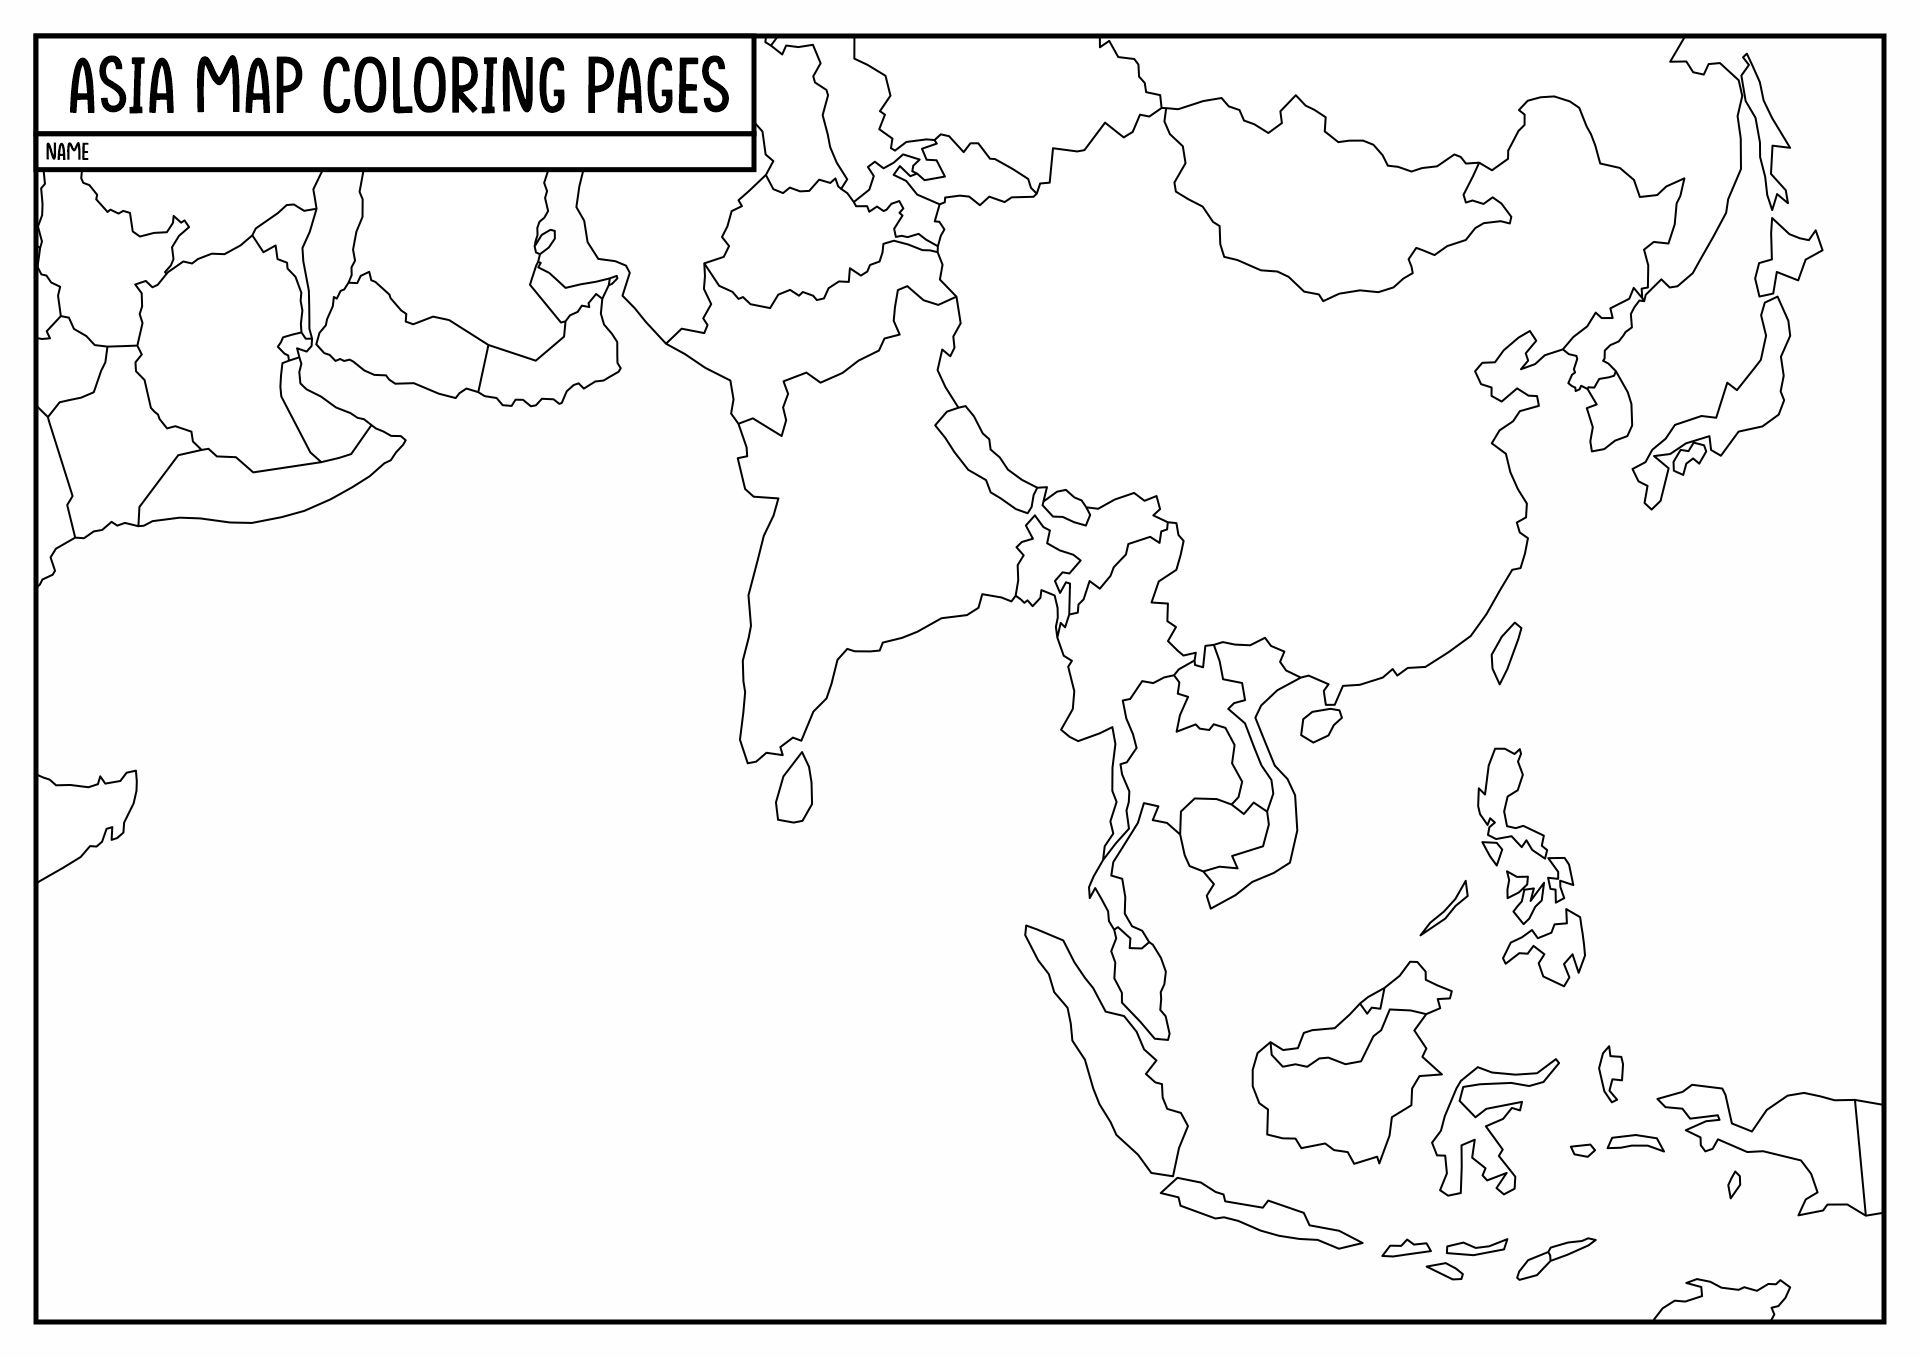 8 Asia Blank Map Worksheets Printable Free PDF at worksheeto com